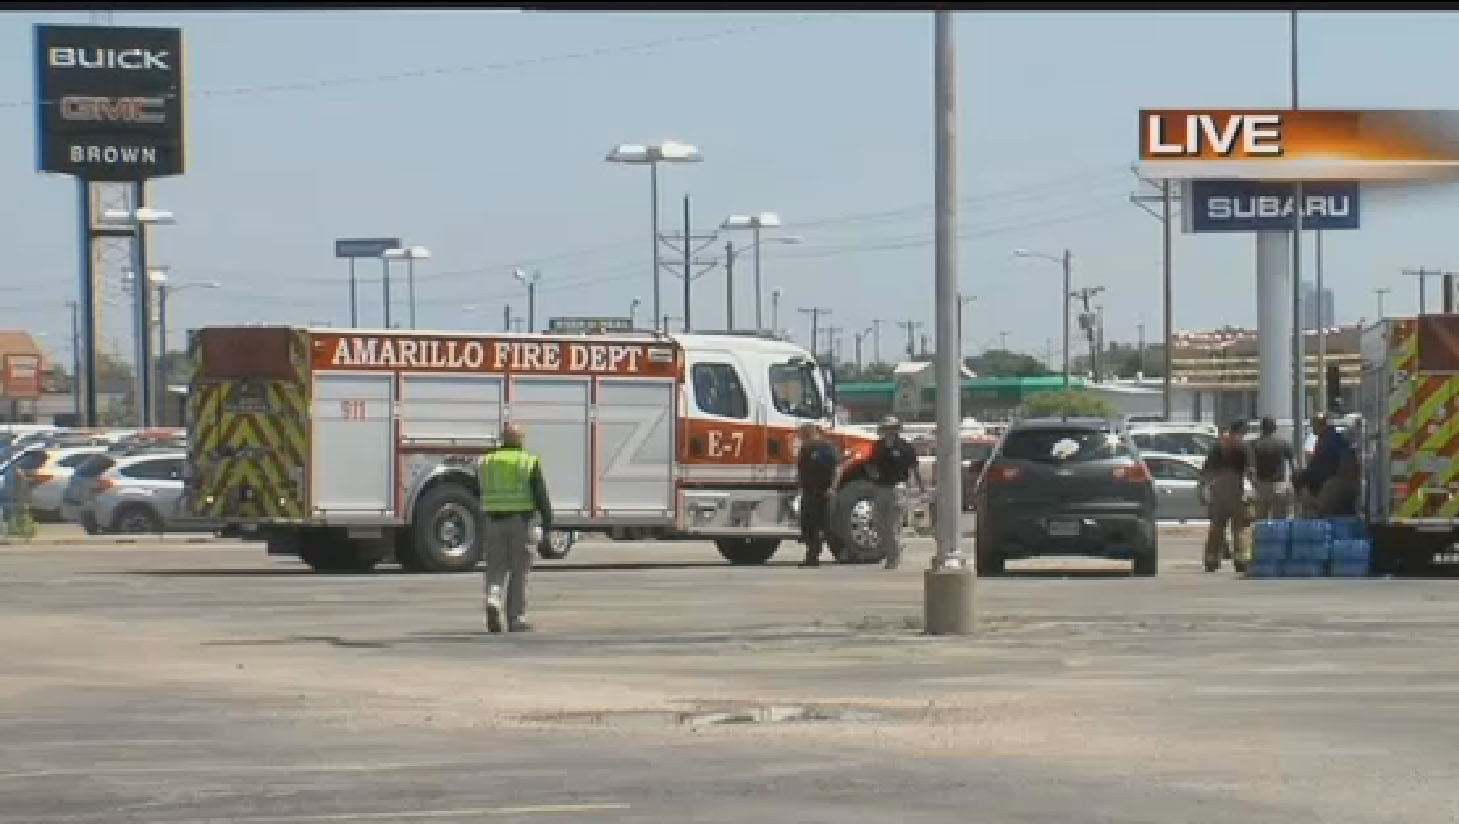 Cops: Suspect dead after Amarillo, Texas Walmart hostage standoff - CBS ...